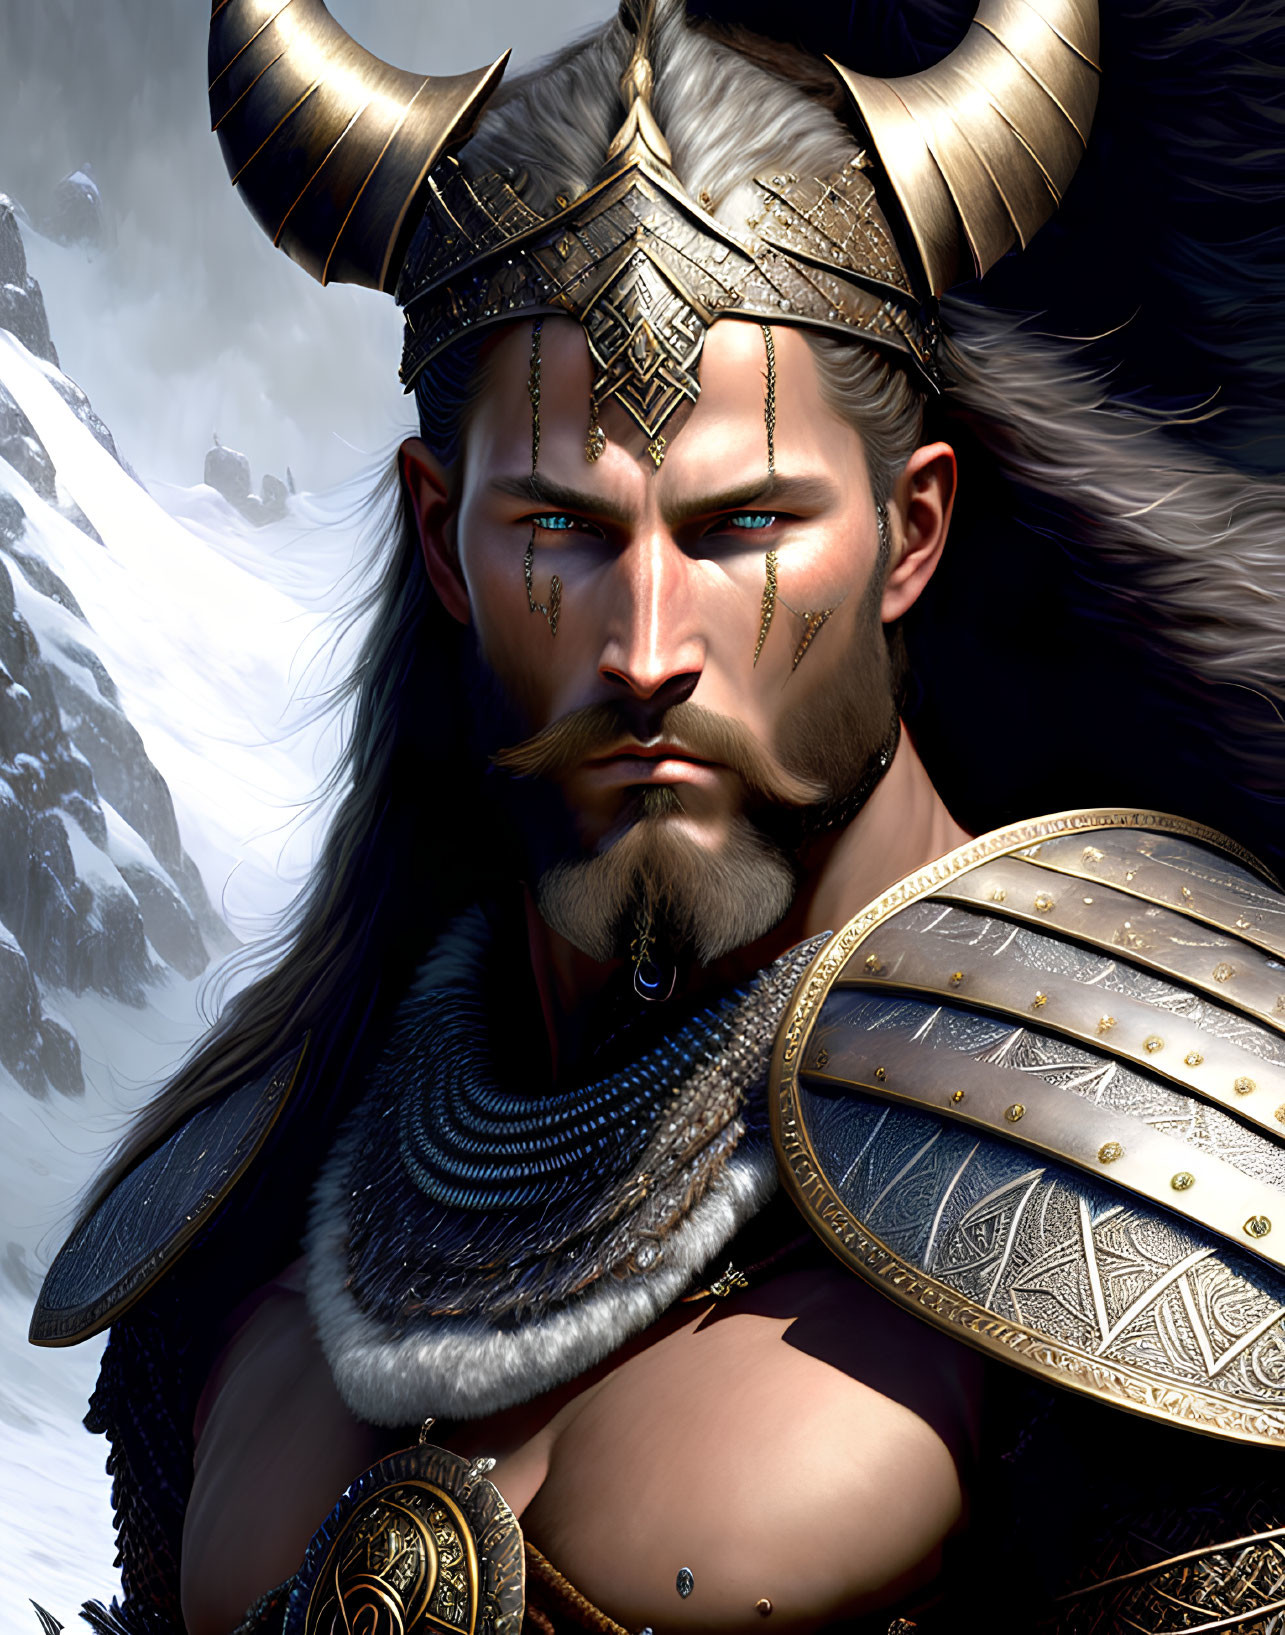 Detailed illustration of bearded fantasy warrior in horned helmet with ornate armor, snowy mountain backdrop